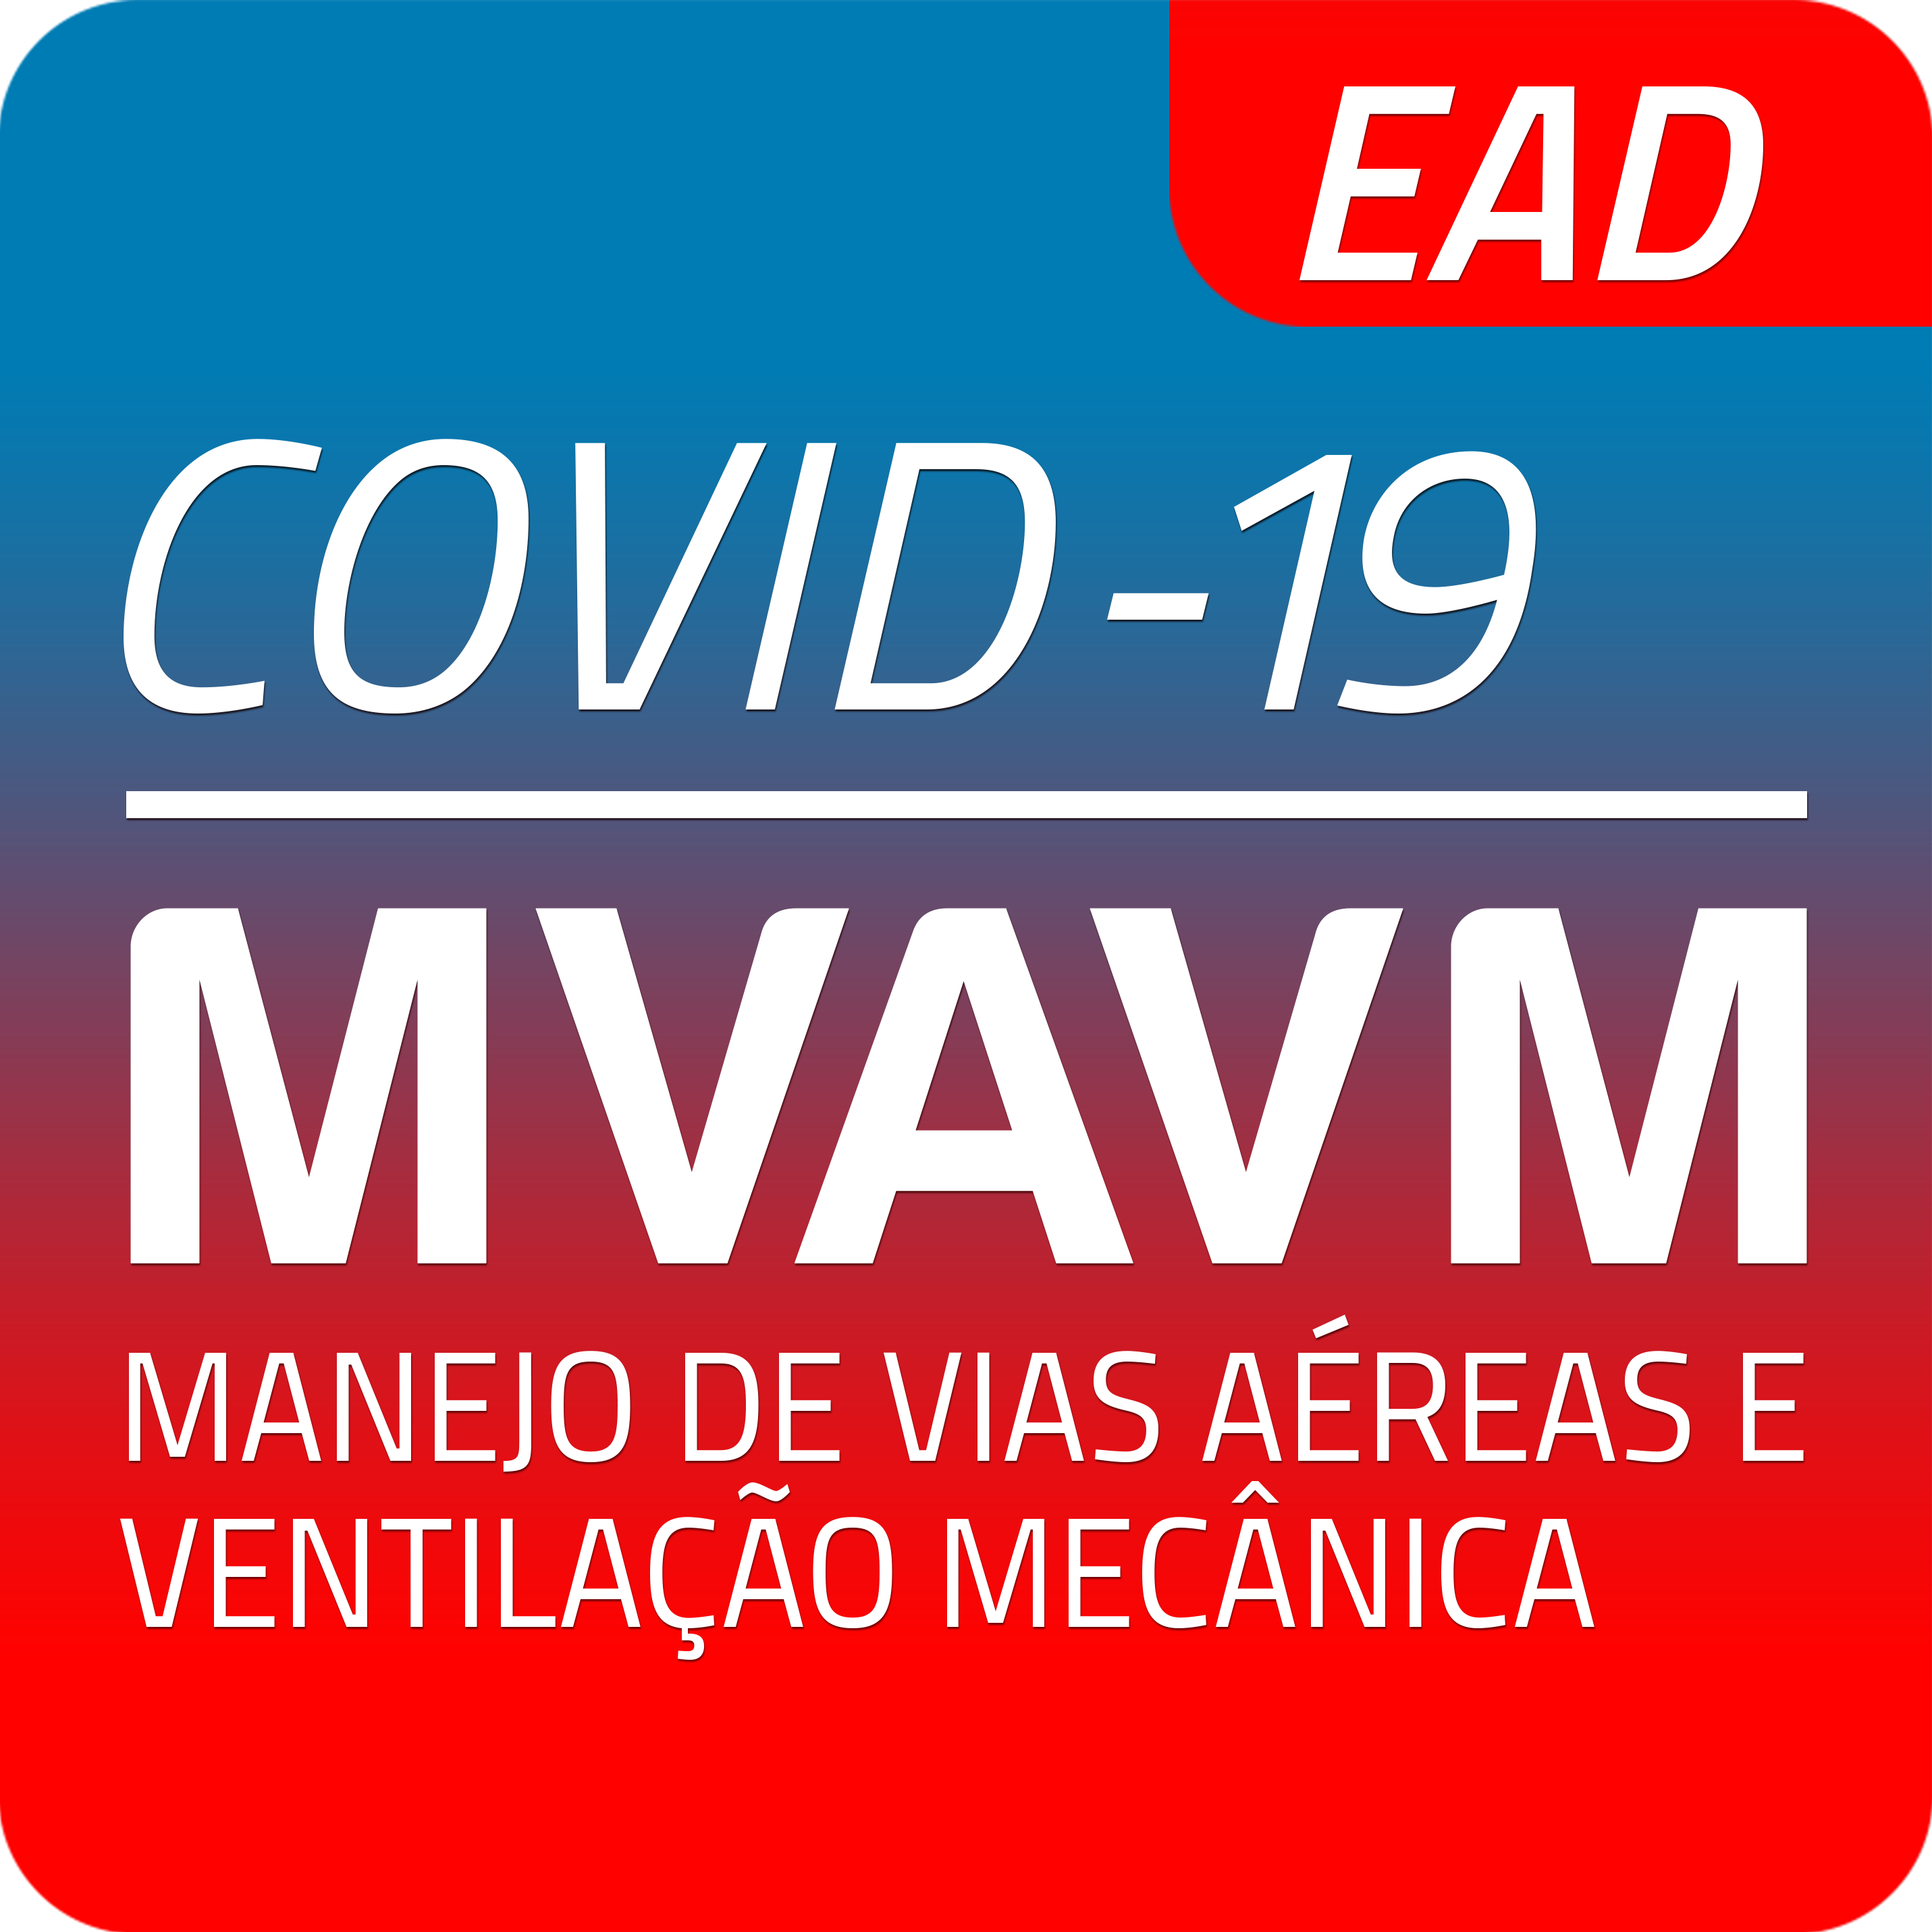 MVAVM